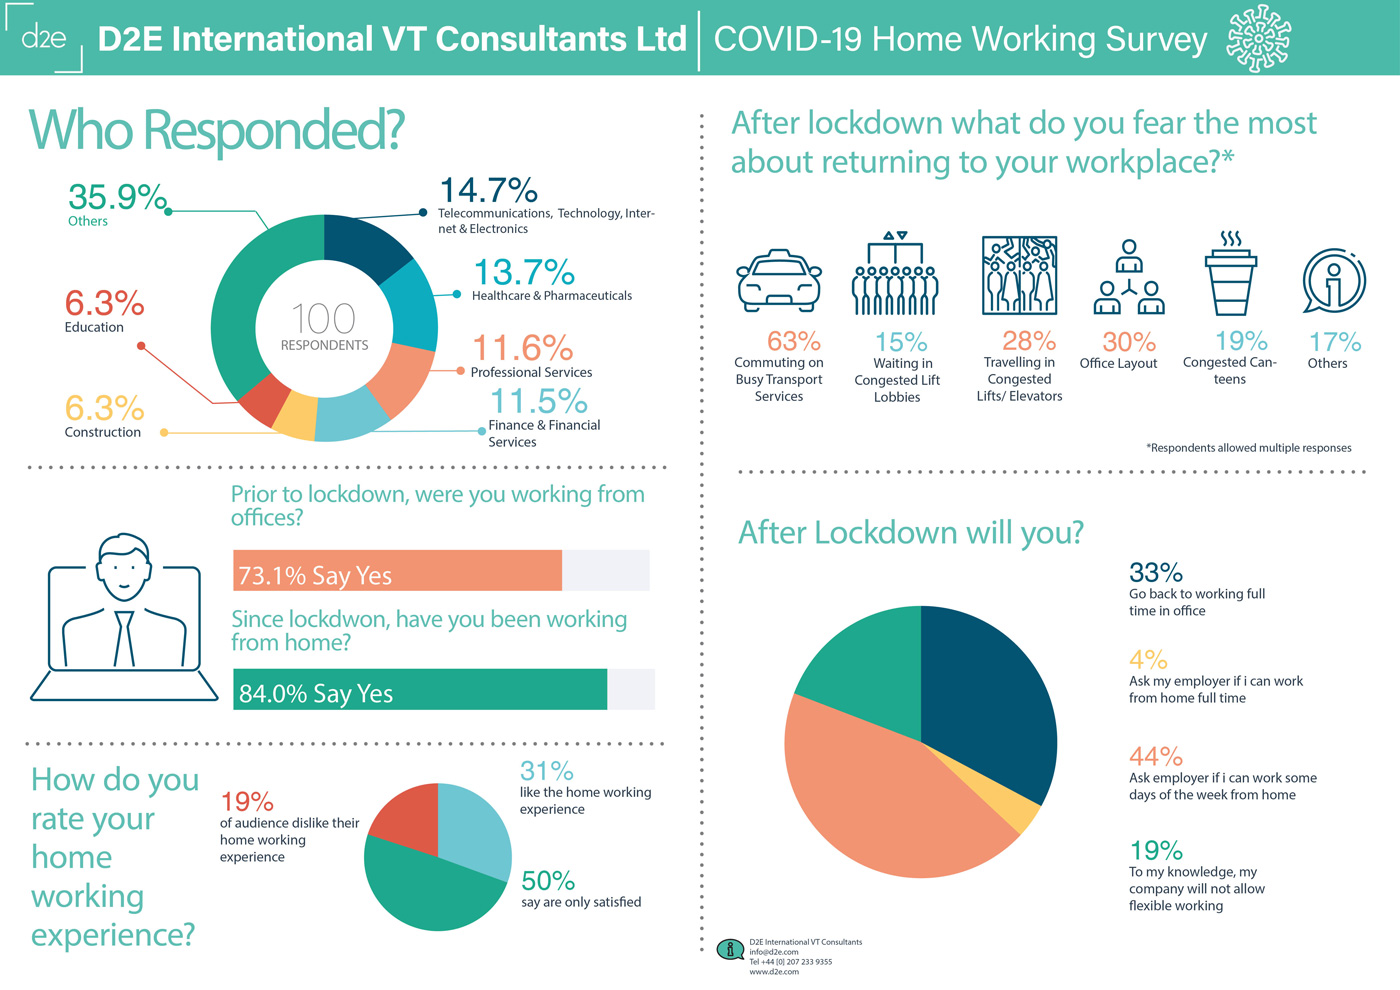 D2E Covid-19 Home Working Survey